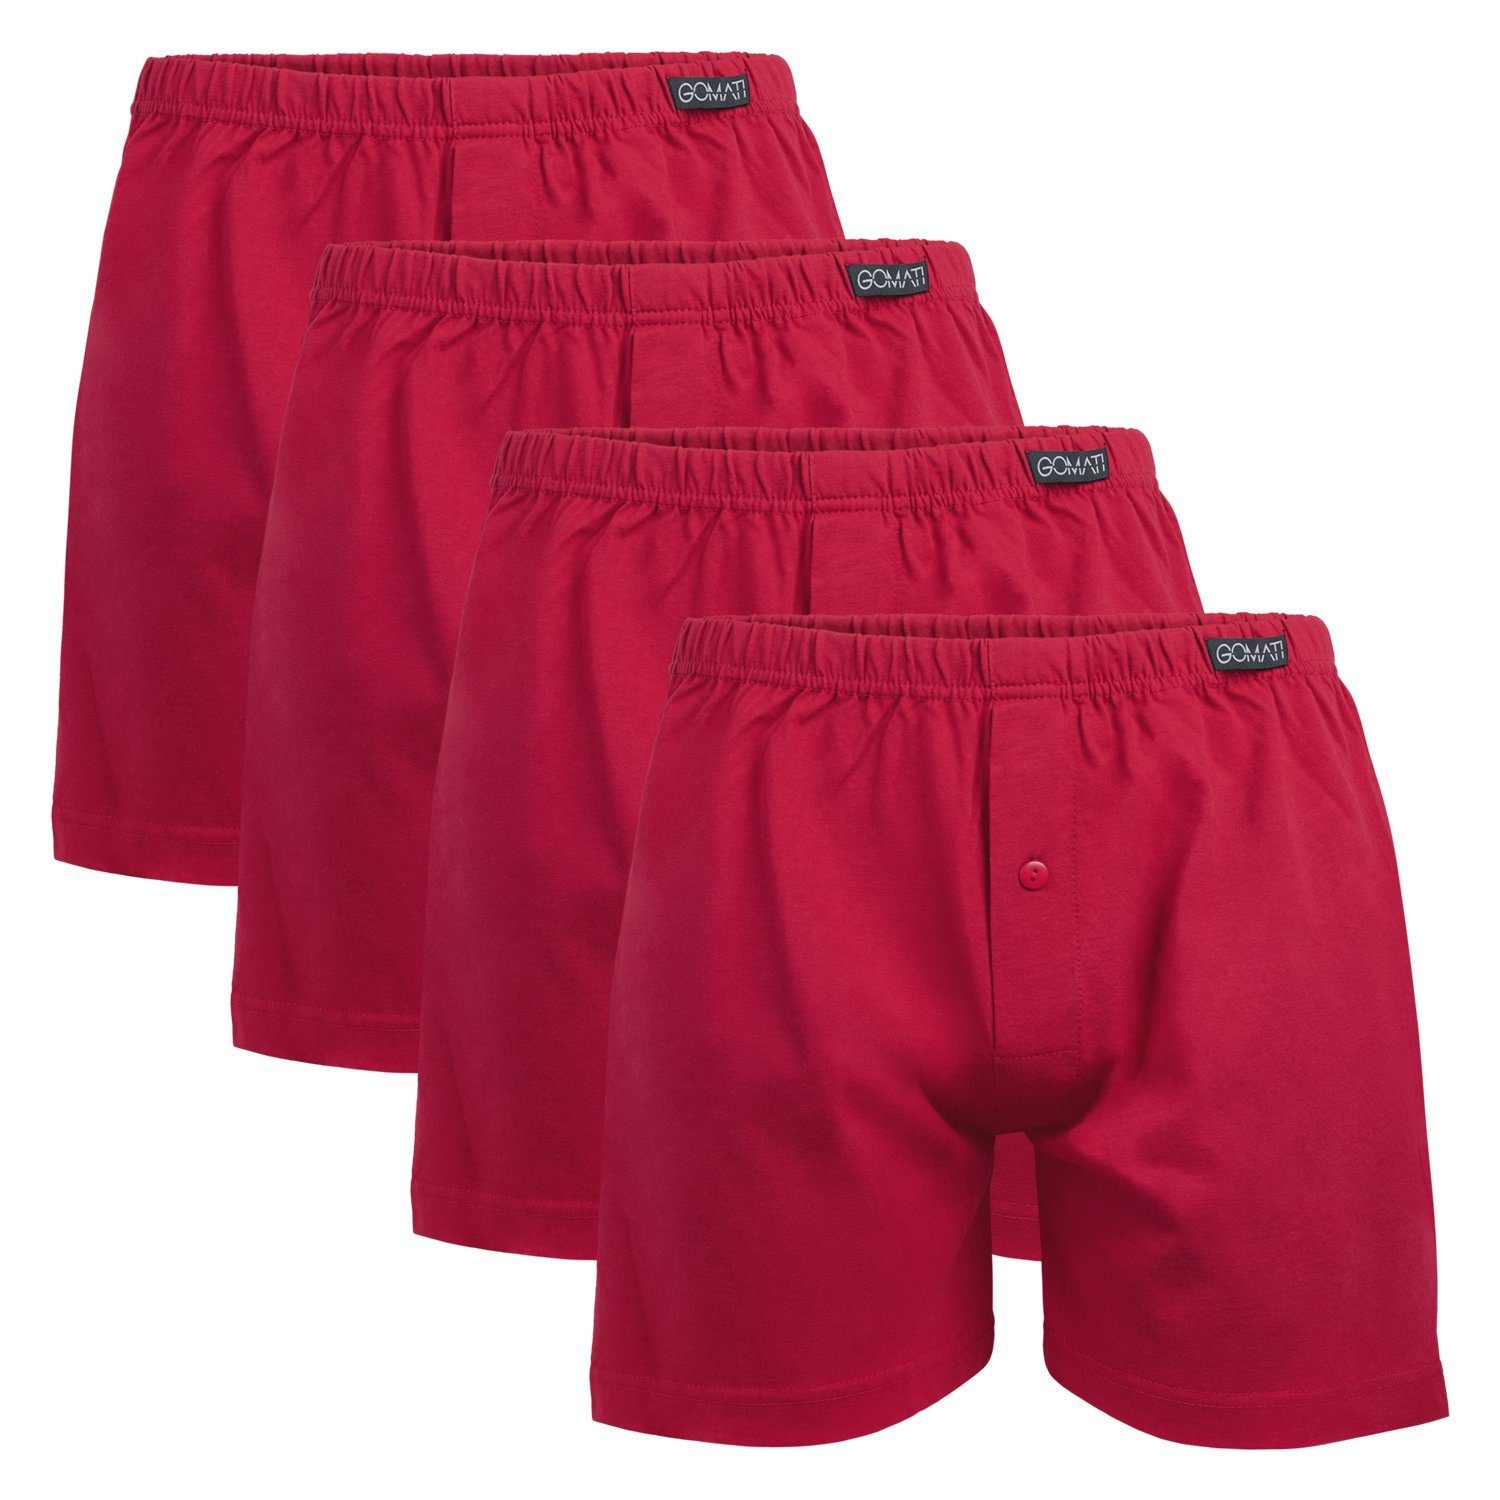 Gomati Boxershorts Herren Jersey Deep Stretch aus Red Boxershorts Pack) Shorts Baumwolle (4er